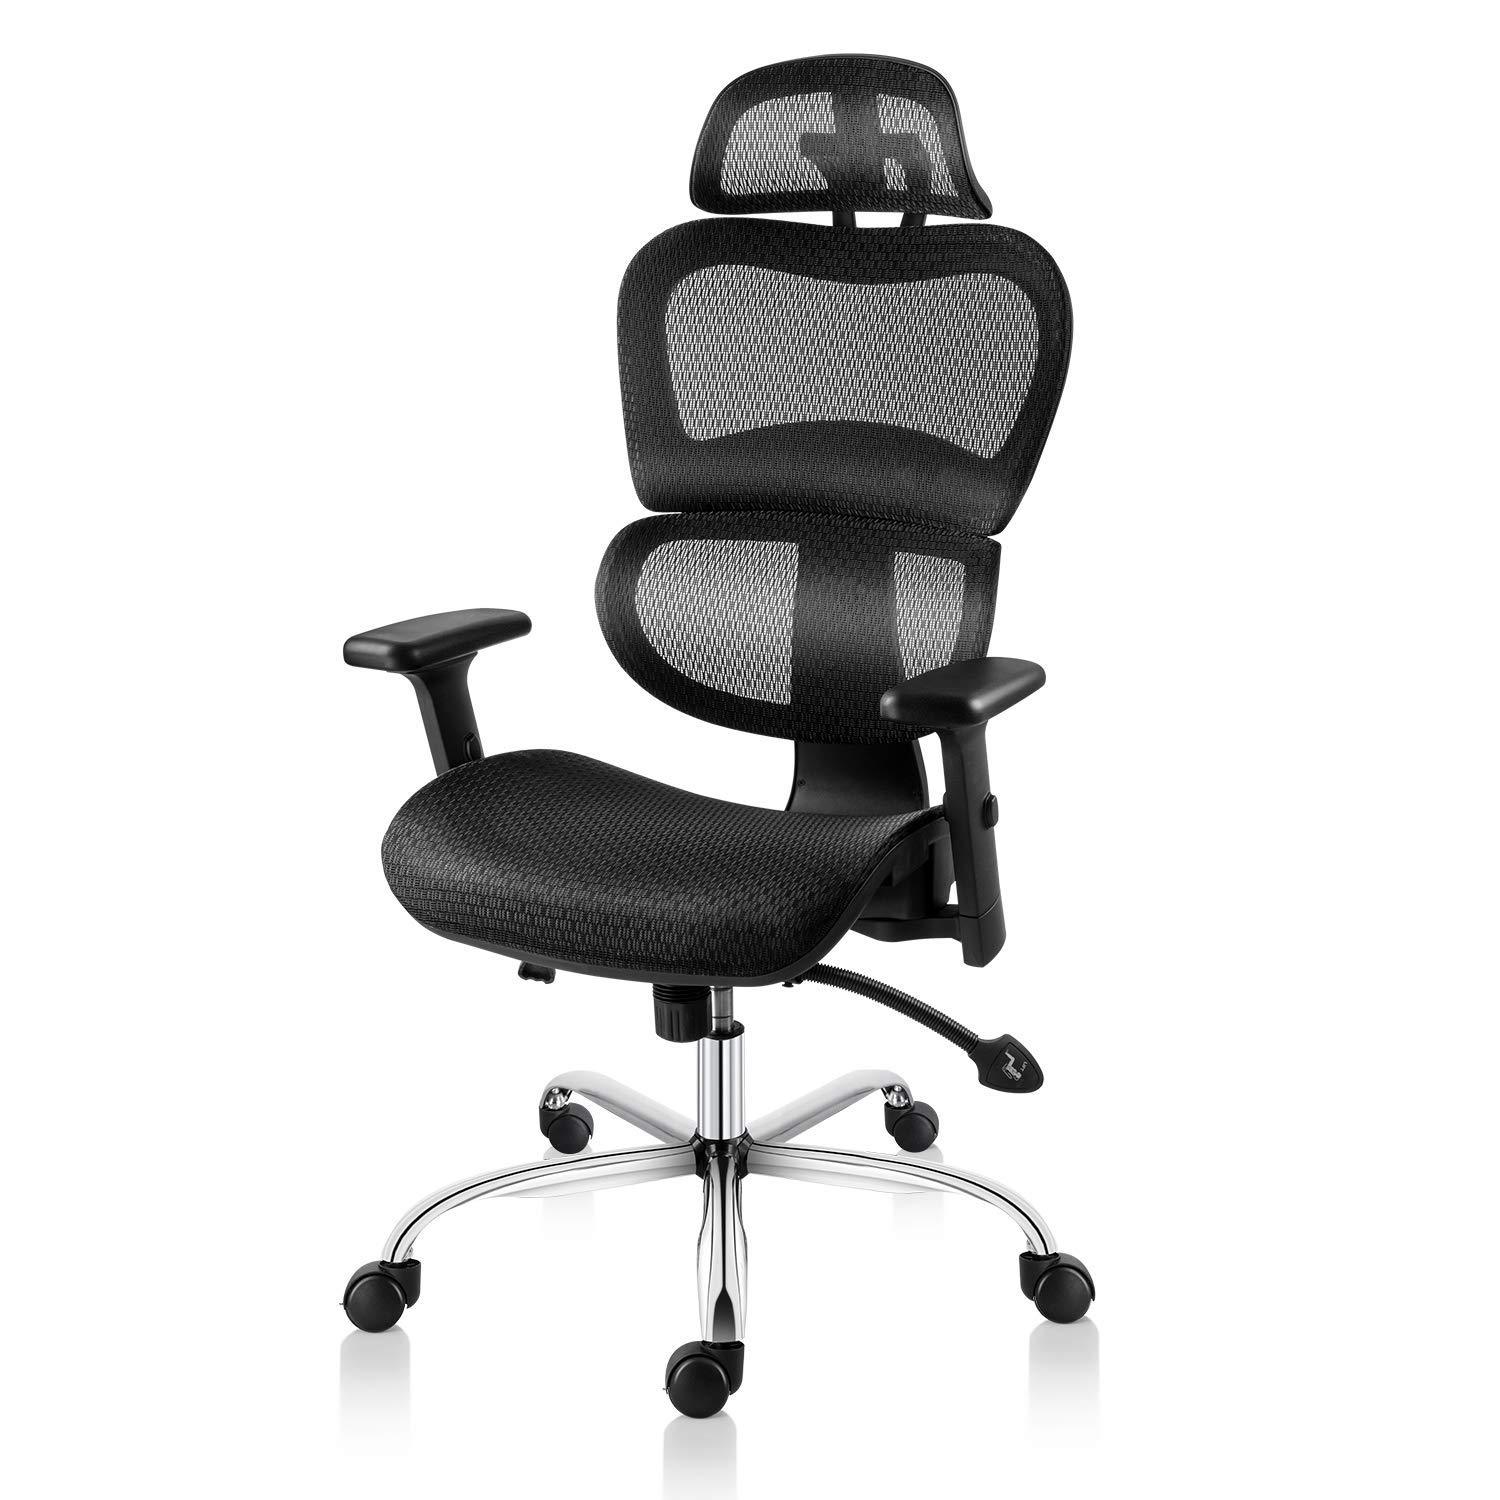 SmugChair Ergonomic High Back Adjustable Office Chair